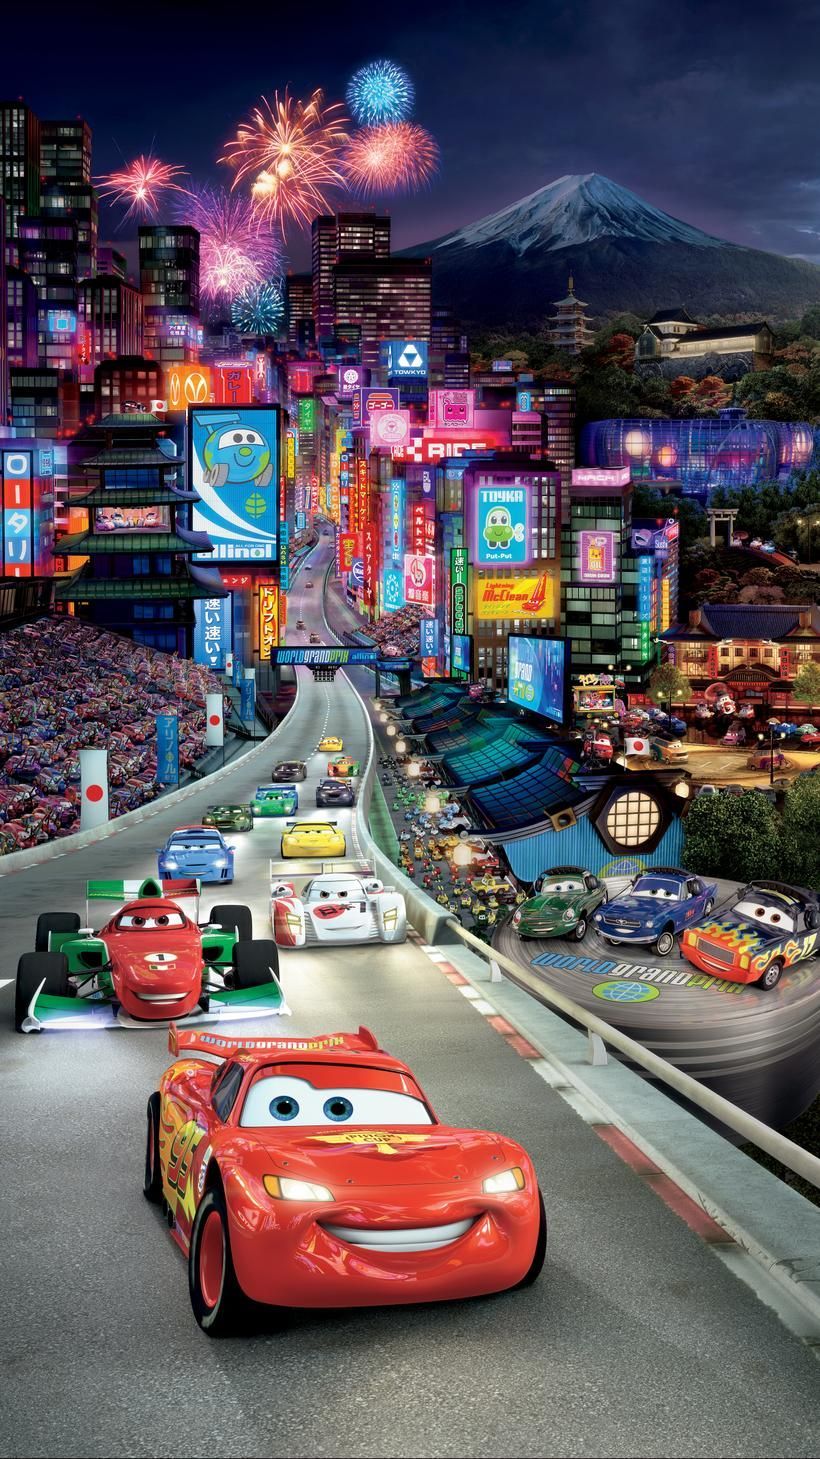 Cars 3 (2017) Phone Wallpaper. Moviemania. Disney cars wallpaper, Cars movie, Pixar cars